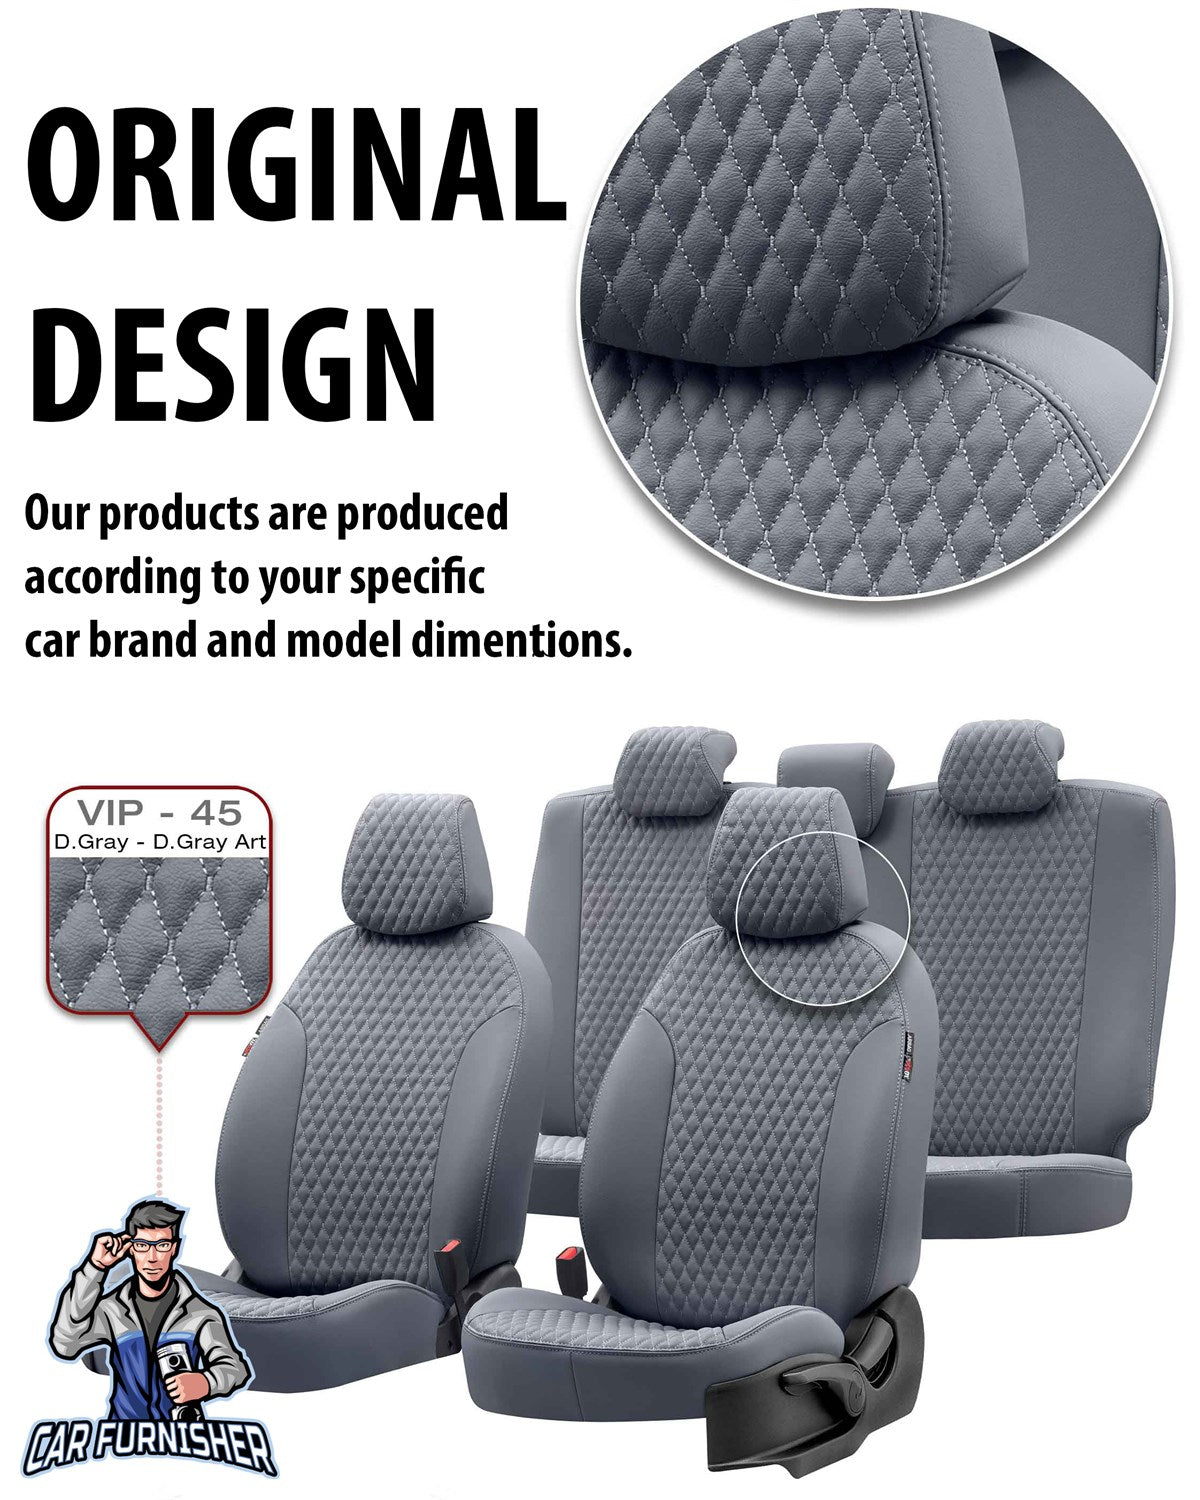 Volkswagen Passat Seat Cover Amsterdam Leather Design Black Leather